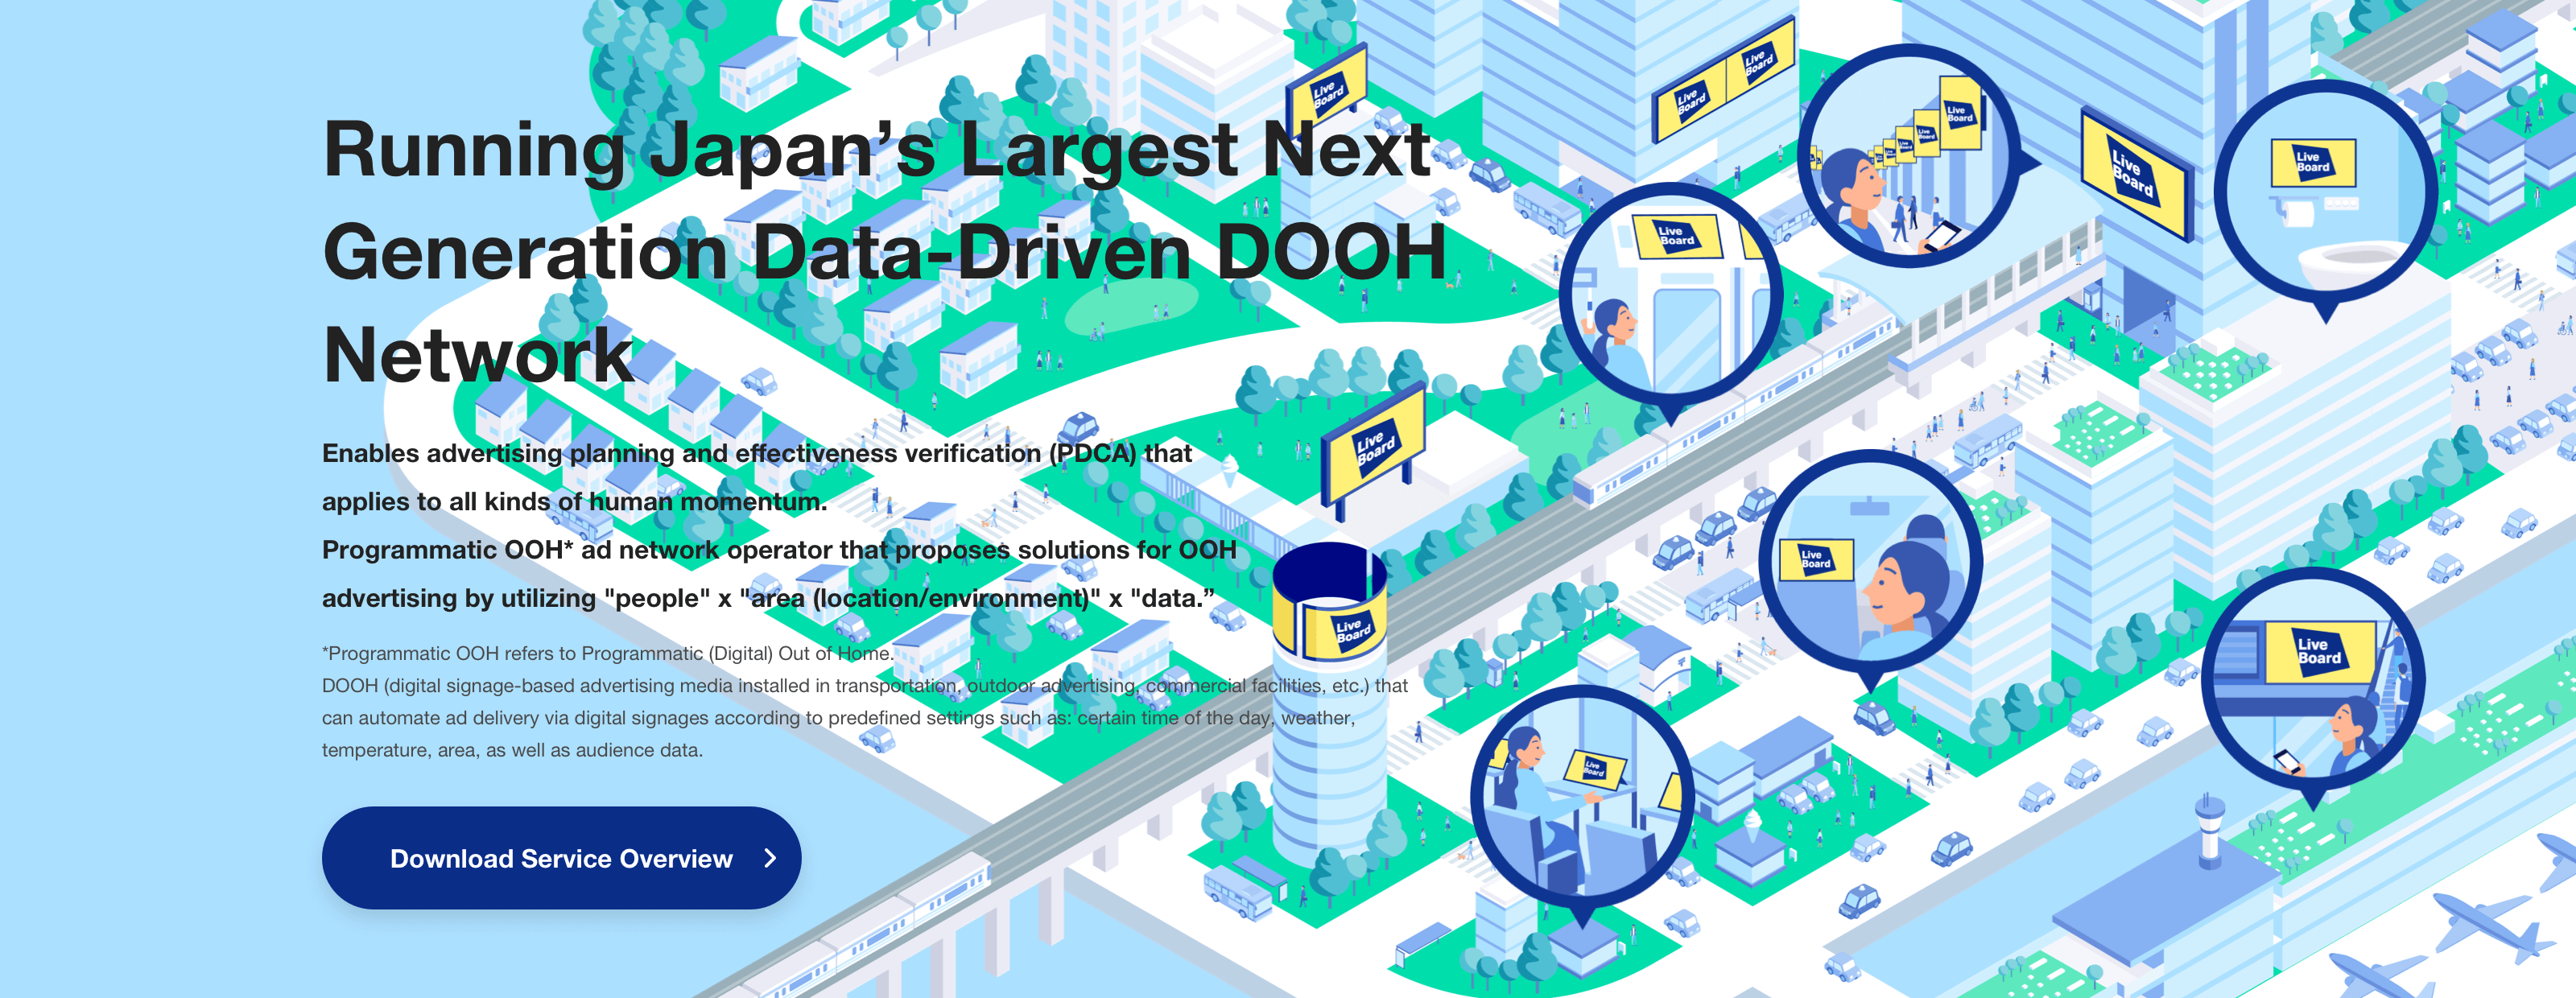 Running Japan's Largest Next Generation Data-Driven DOOH Network